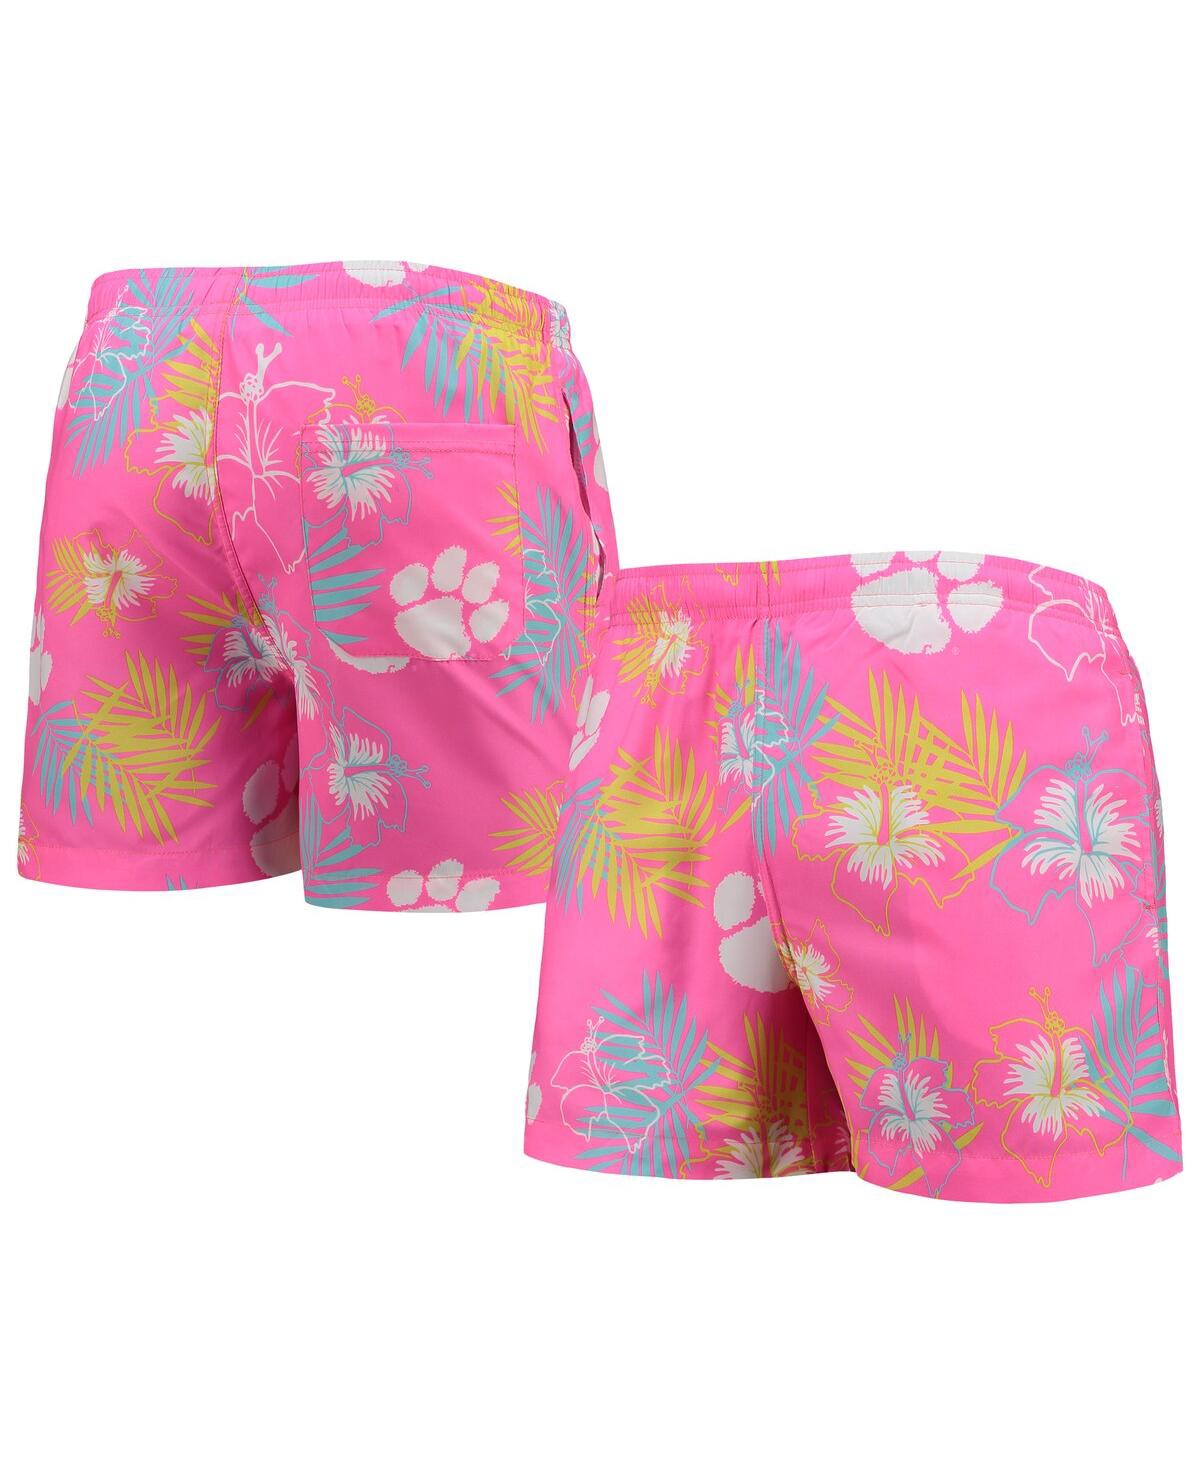 Men's Foco Pink Clemson Tigers Neon Floral Swim Trunks - Pink